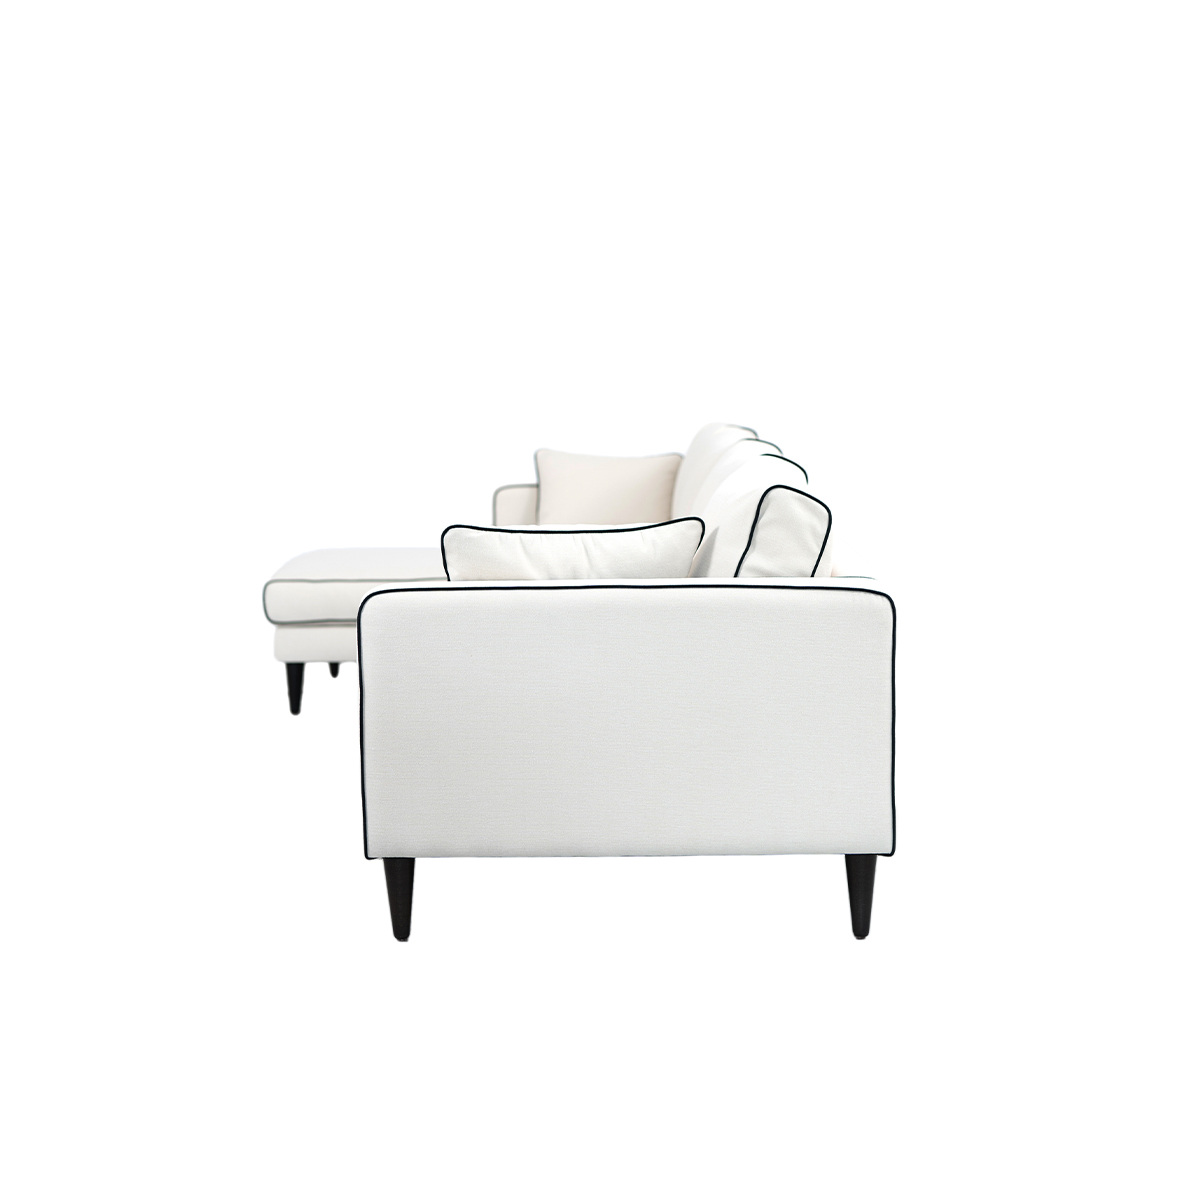 Noa corner sofa - Left angle, Different sizes - Cotton - image 3